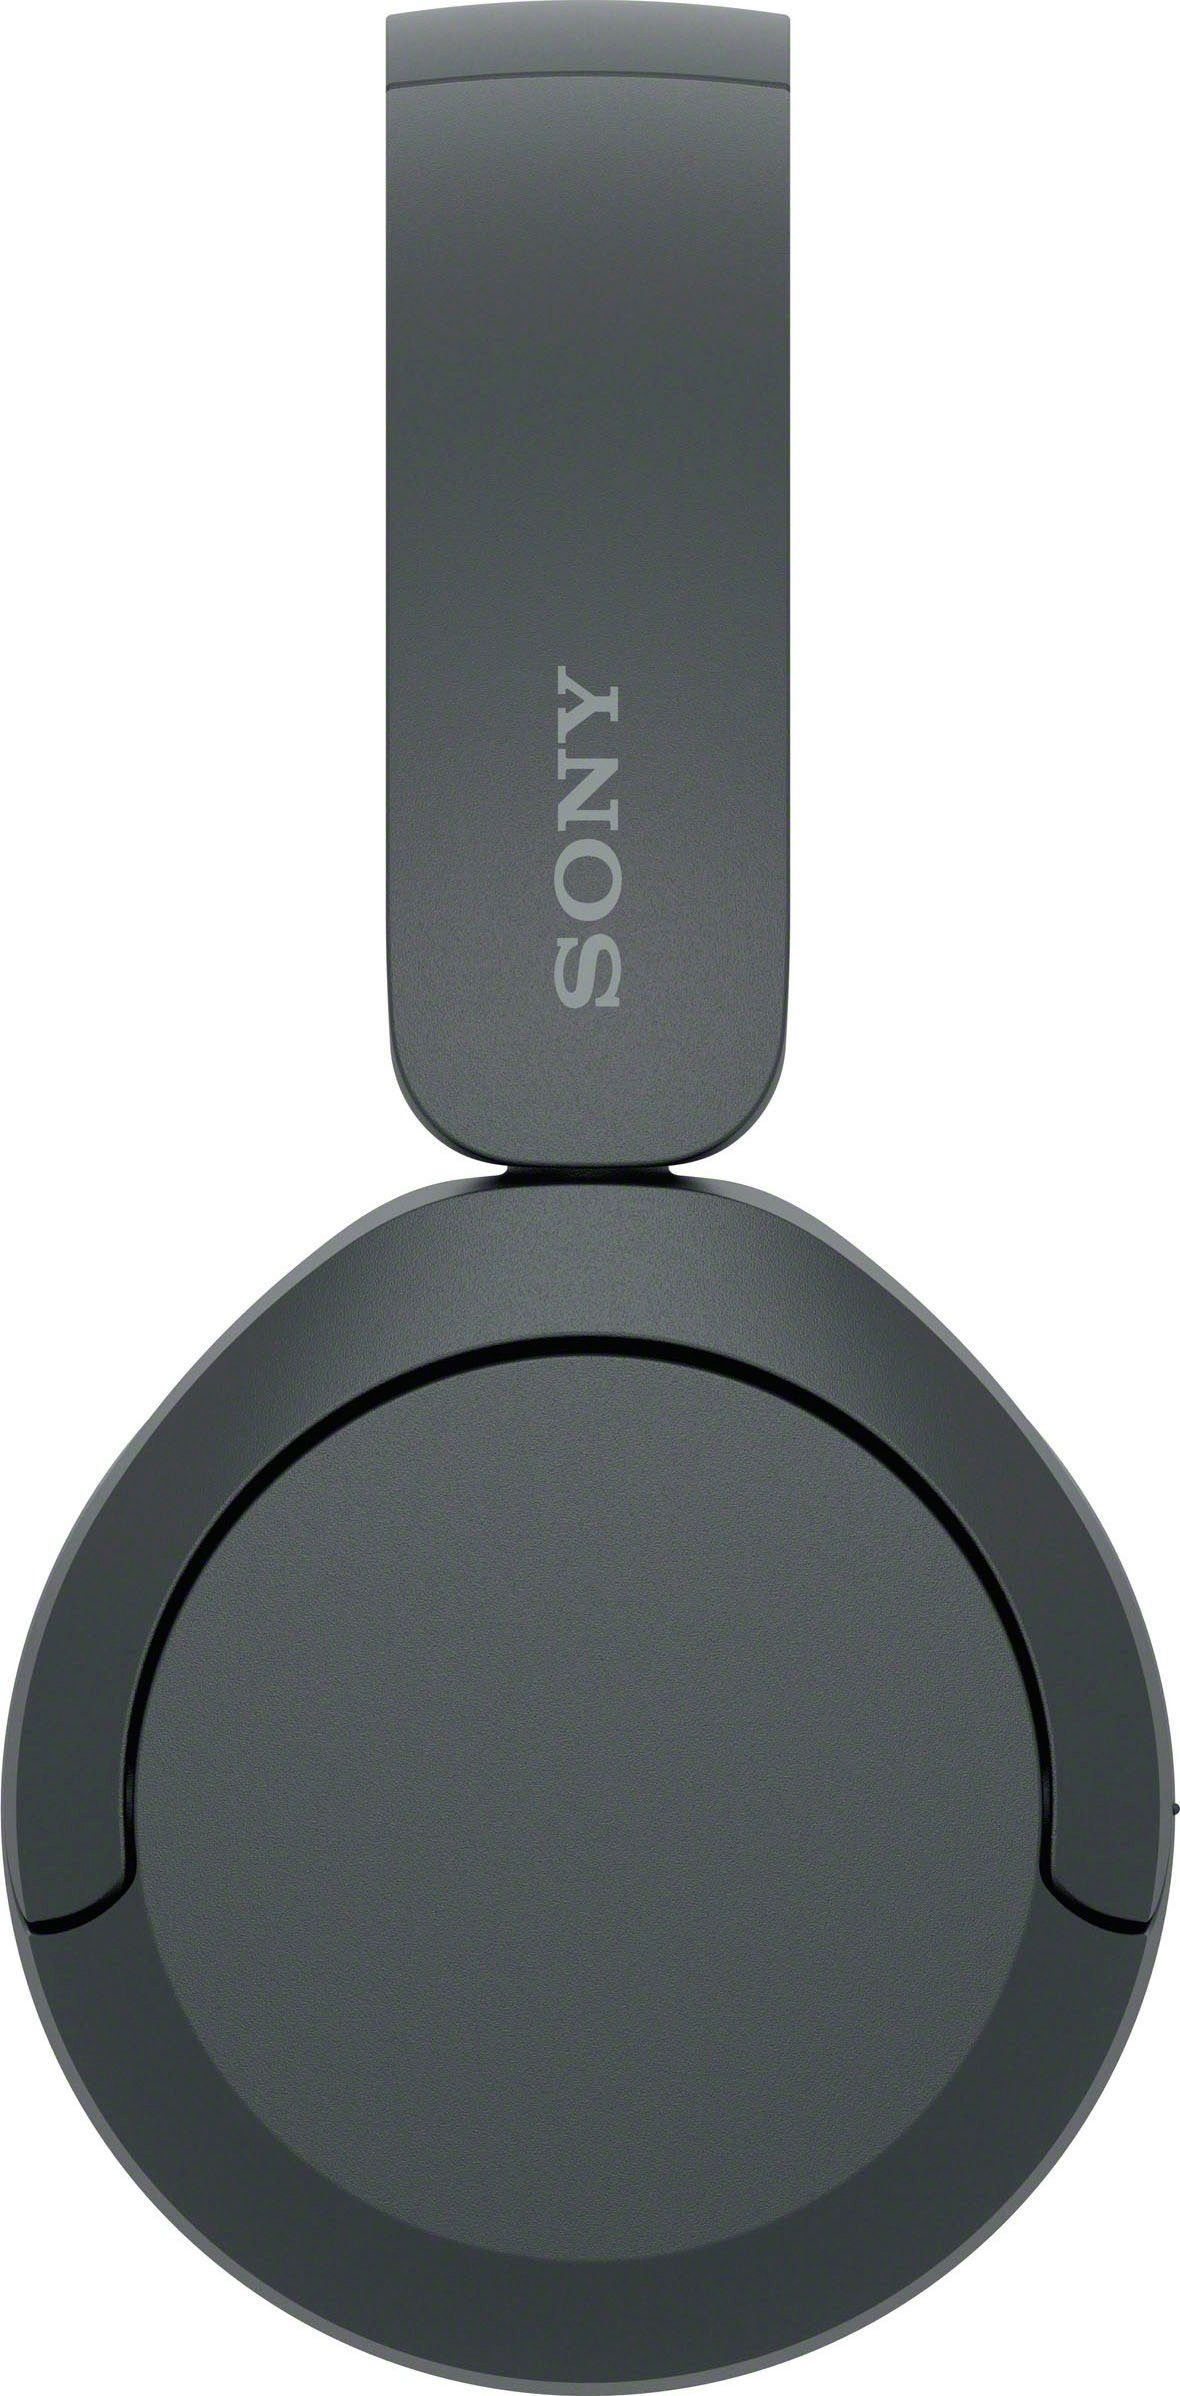 Sony WHCH520 Rauschunterdrückung, Bluetooth, Akkulaufzeit) 50 On-Ear-Kopfhörer Siri, Std. Schwarz Assistant, (Freisprechfunktion, Google